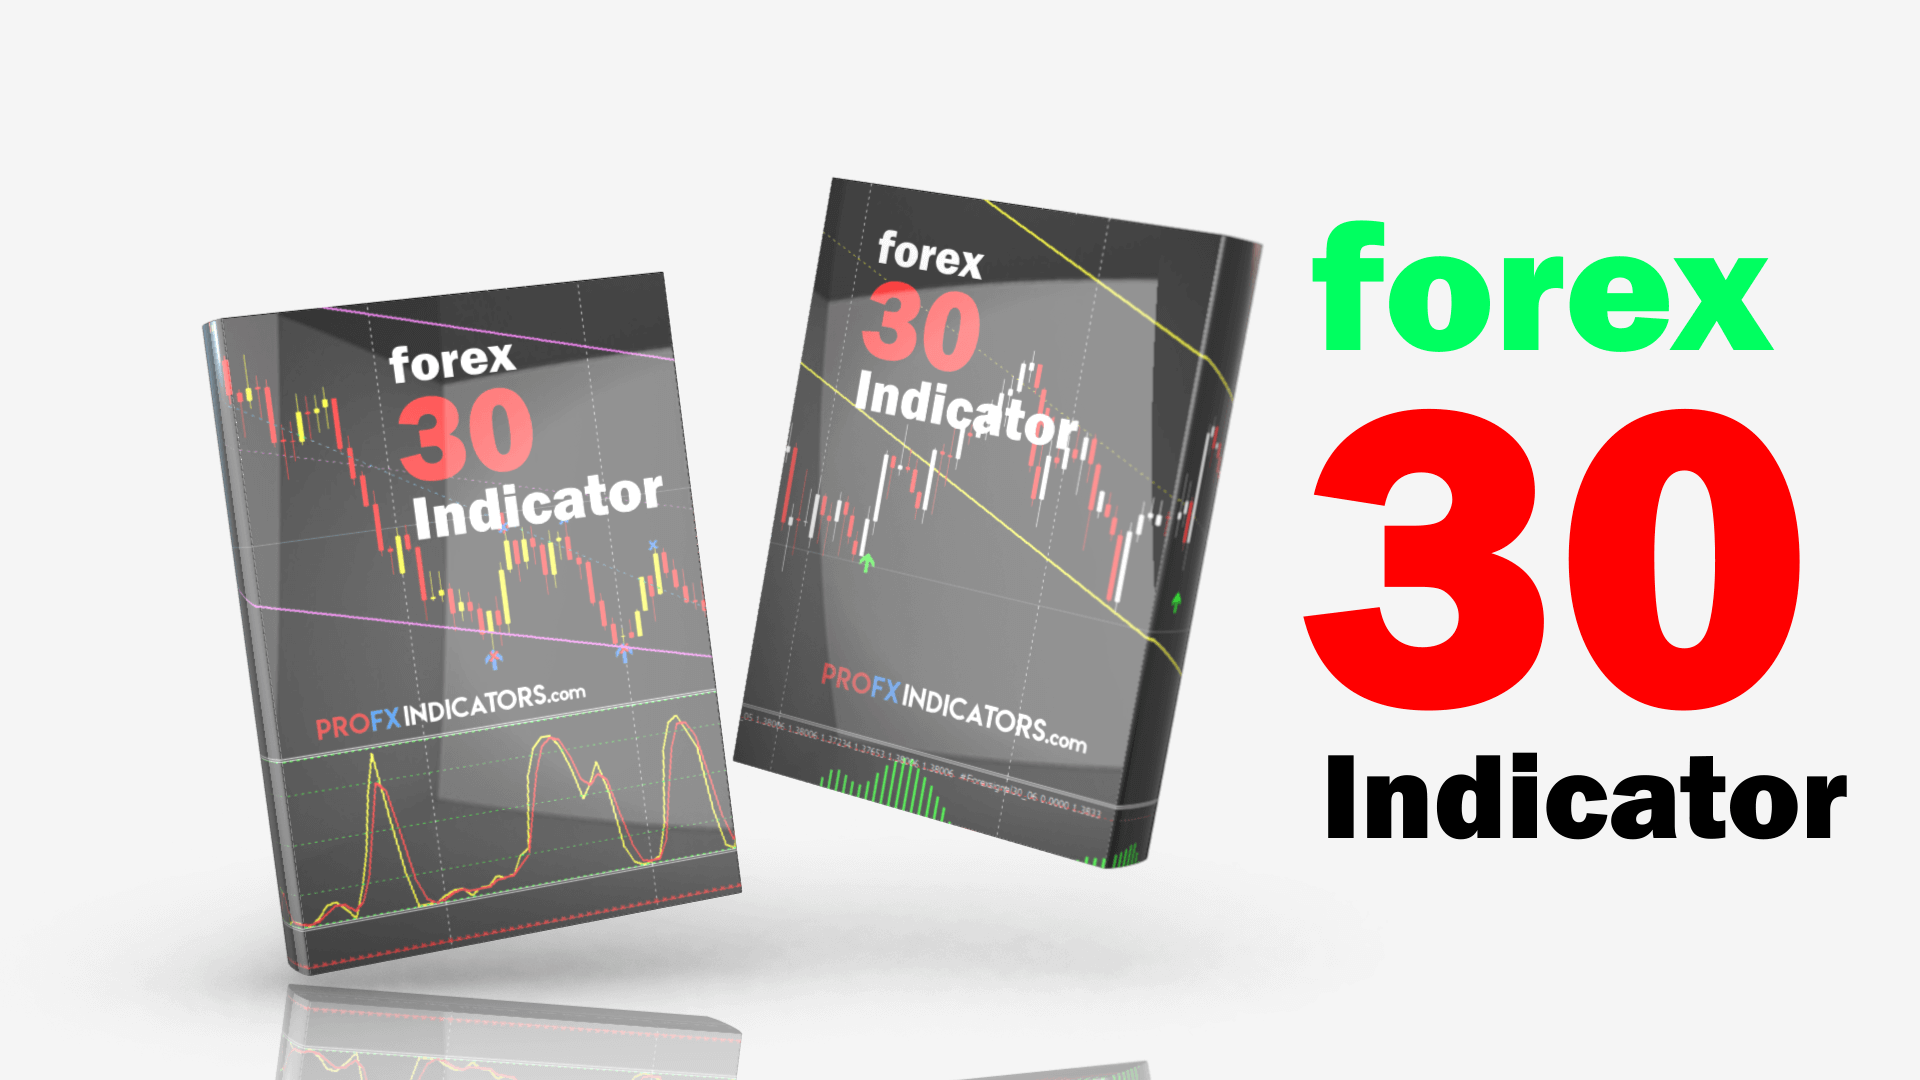 Forex 30 Indicator System image